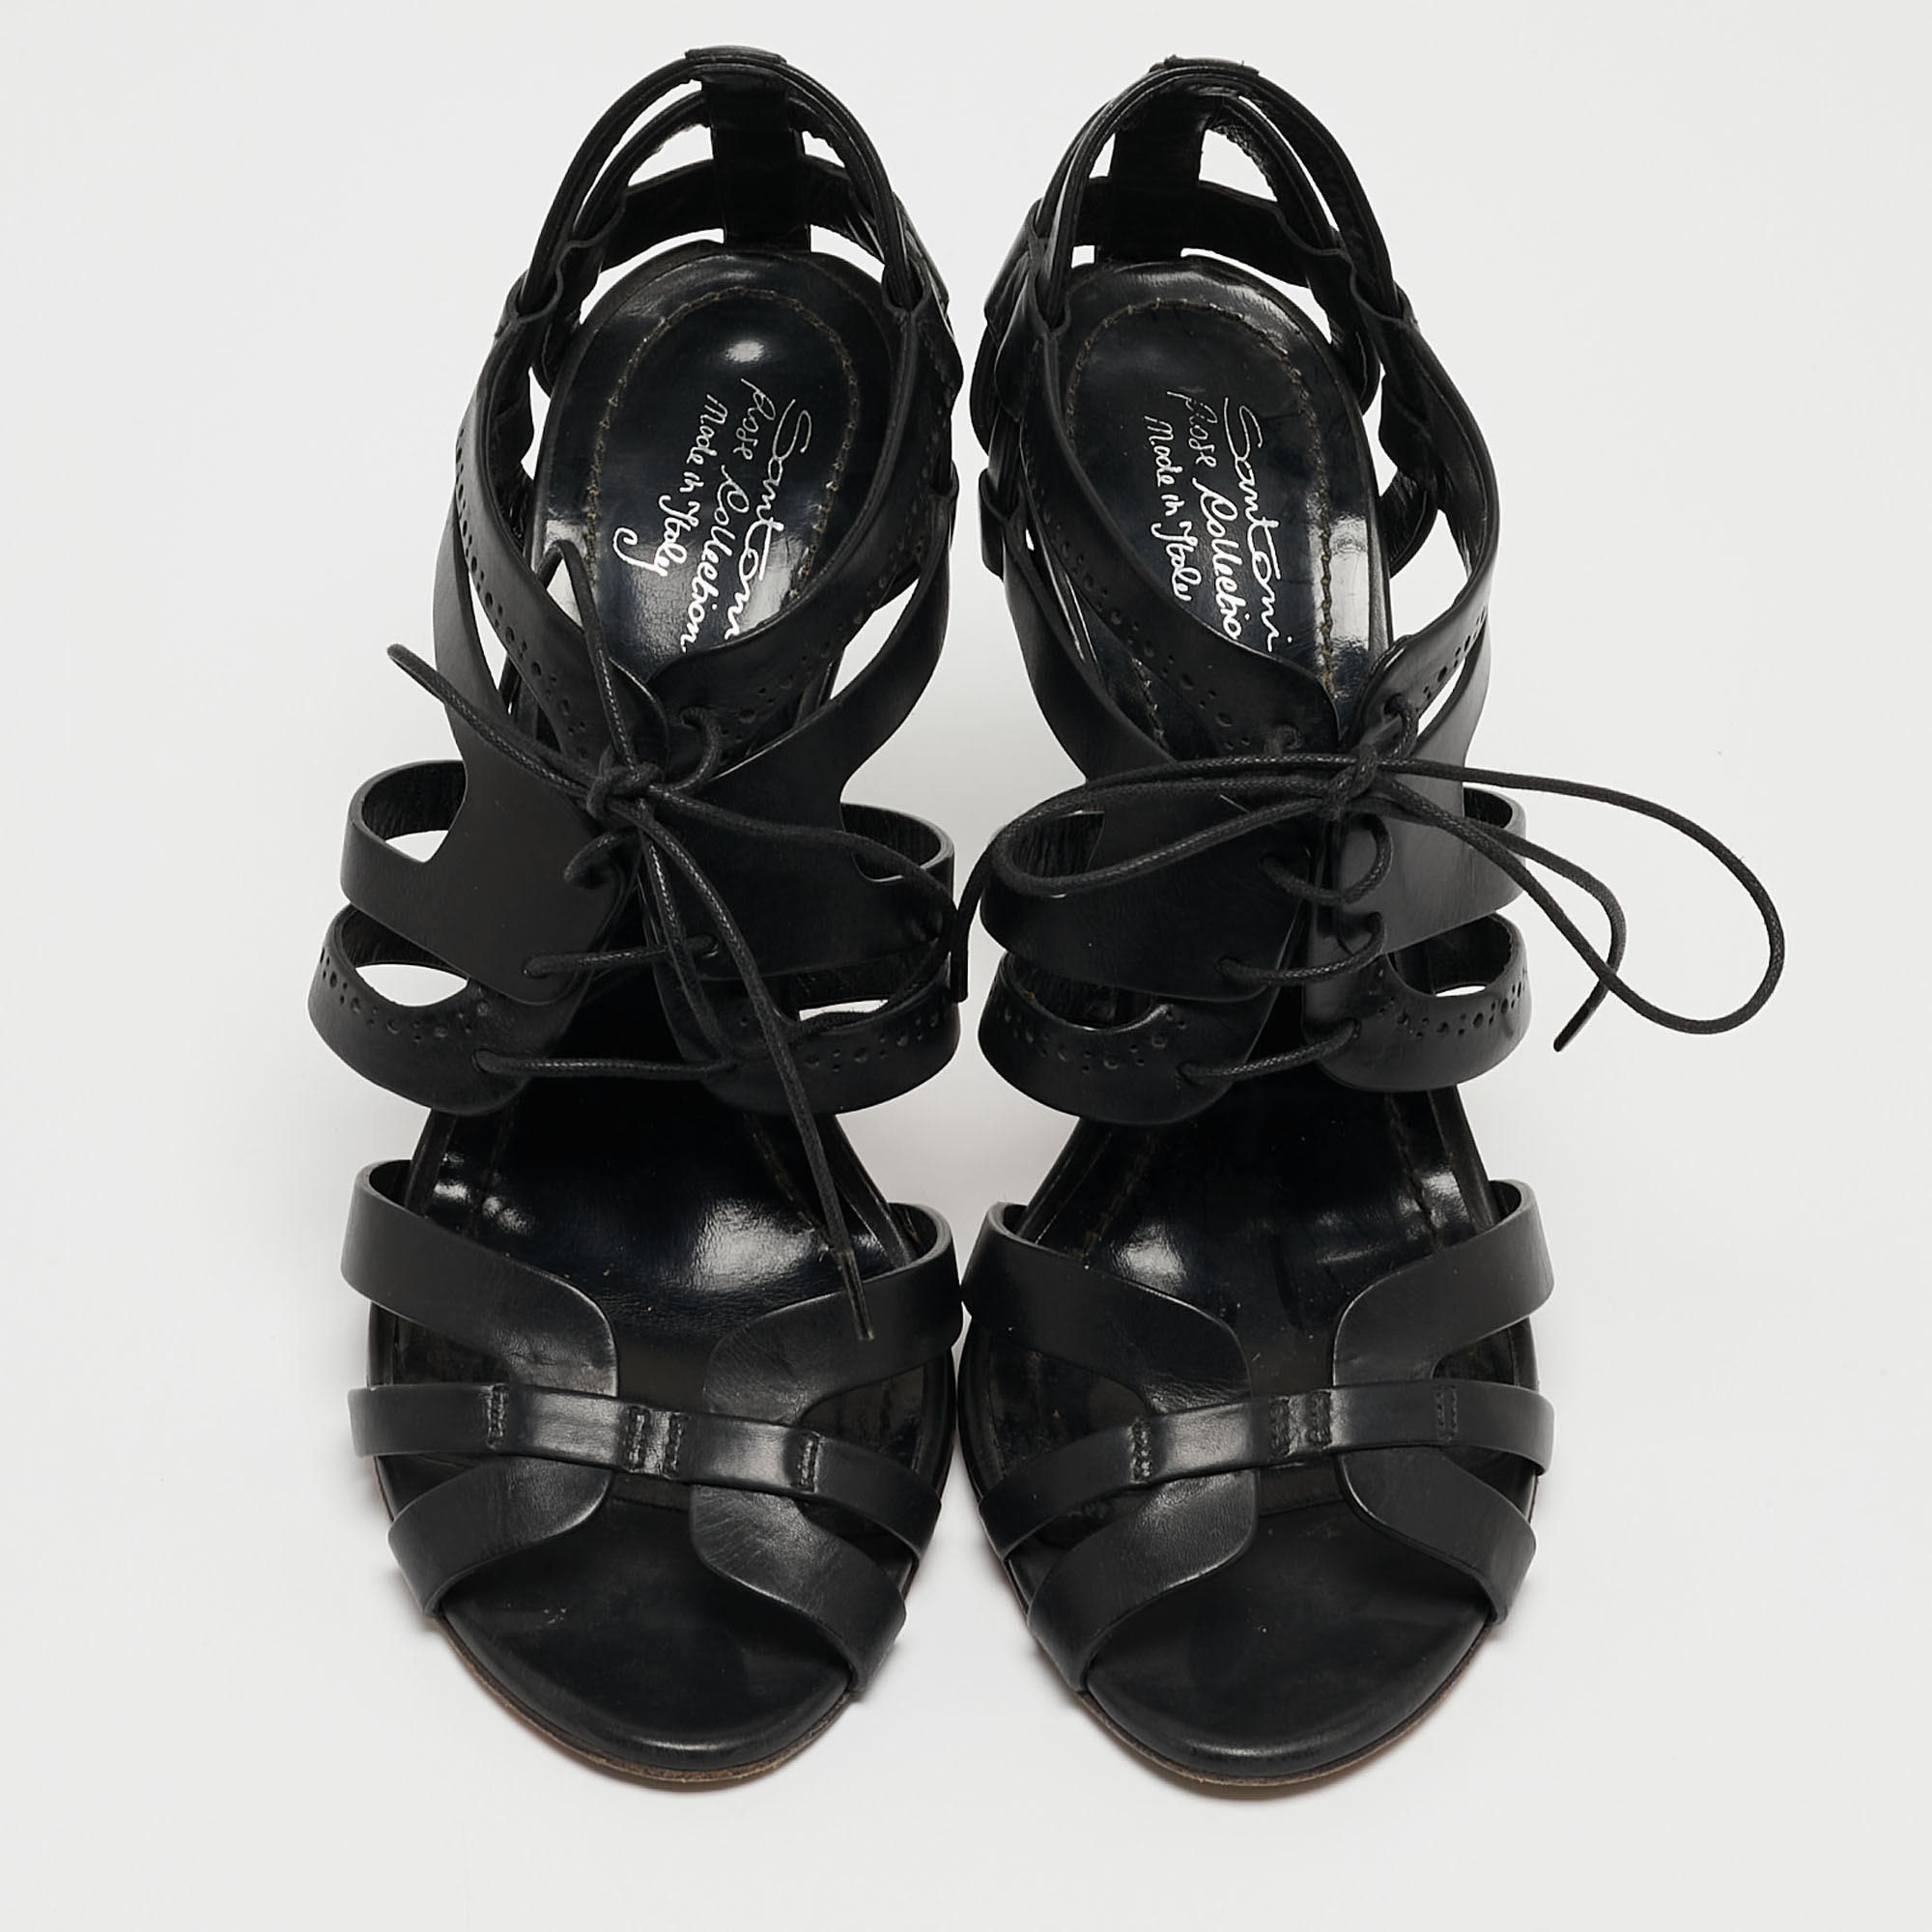 Santoni Black Leather Strappy Sandals Size 37.5